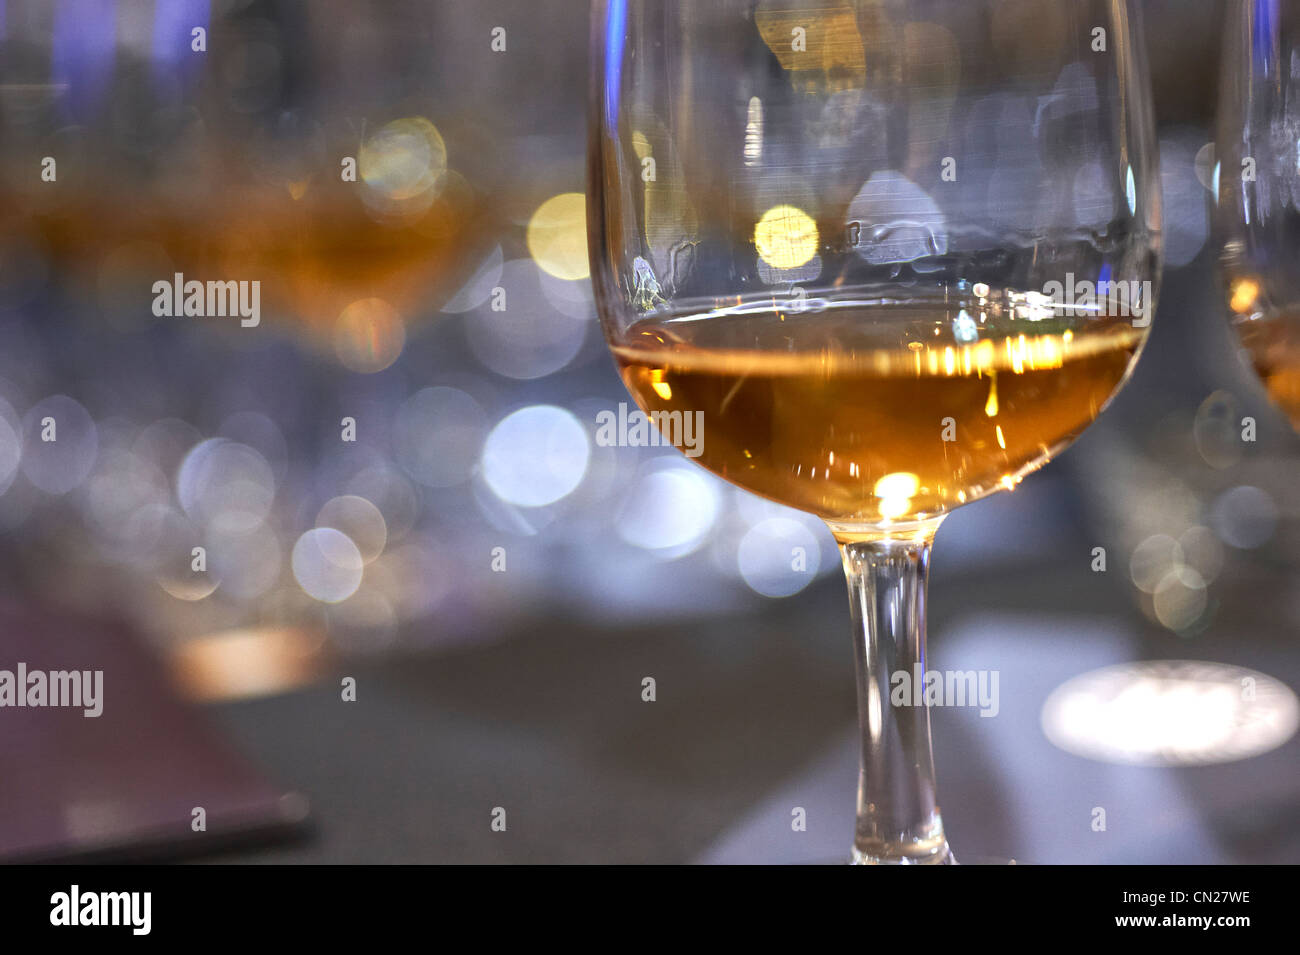 El whisky escocés de Escocia beber alcohol bebidas alcohol bebido whisky de vidrio Foto de stock